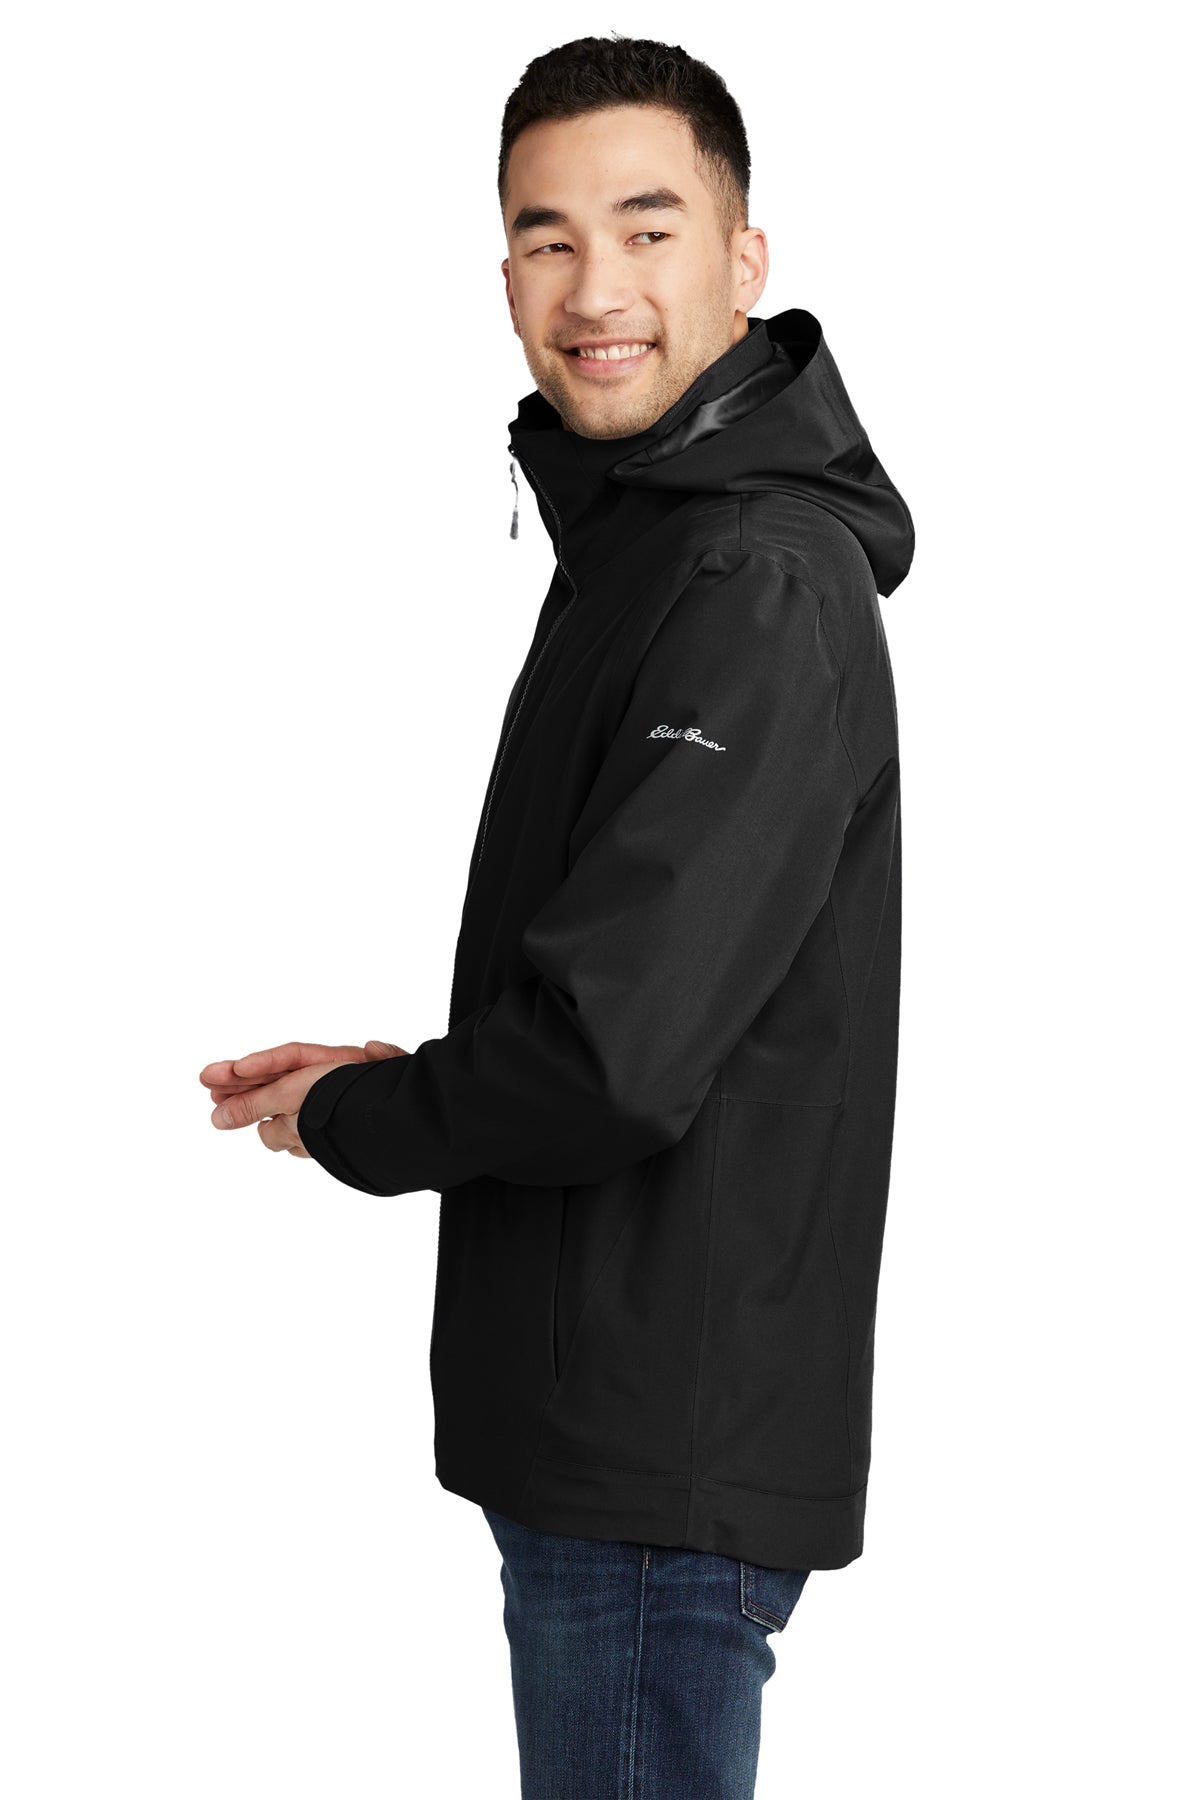 Eddie Bauer WeatherEdge Custom 3-in-1 Jackets, Black/ Storm Grey